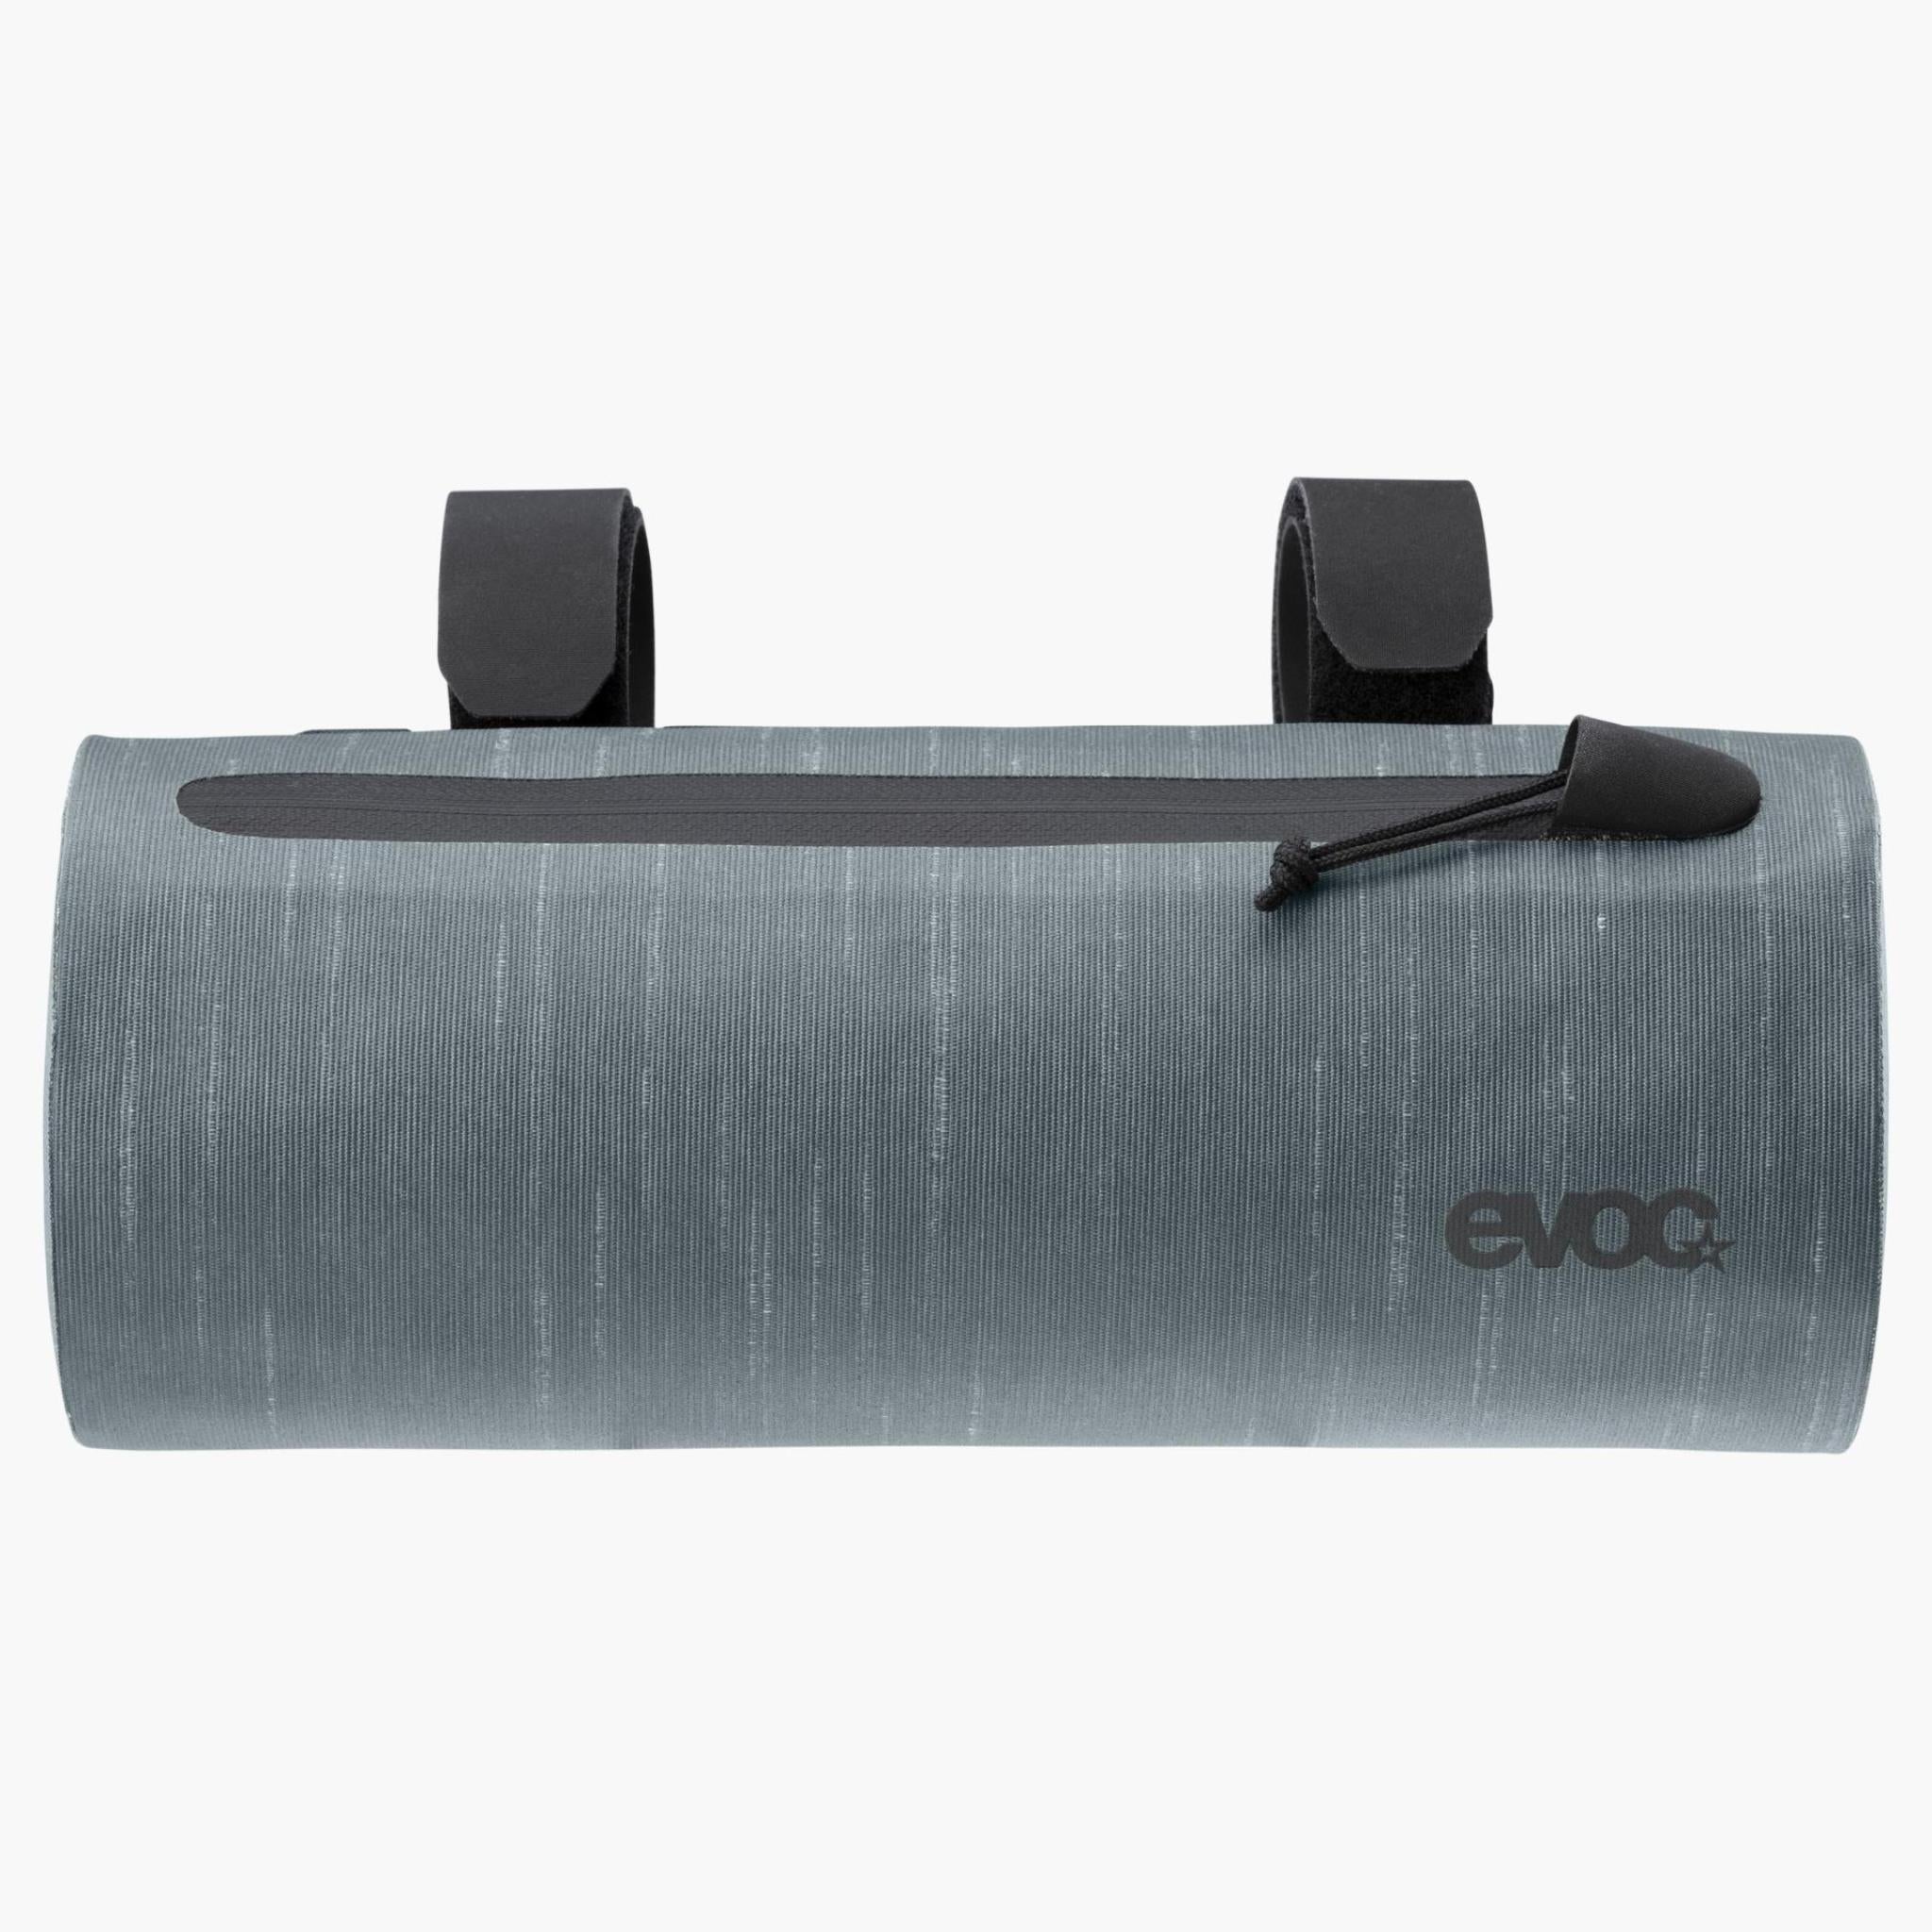 EVOC Handlebar Pack WP 1.5